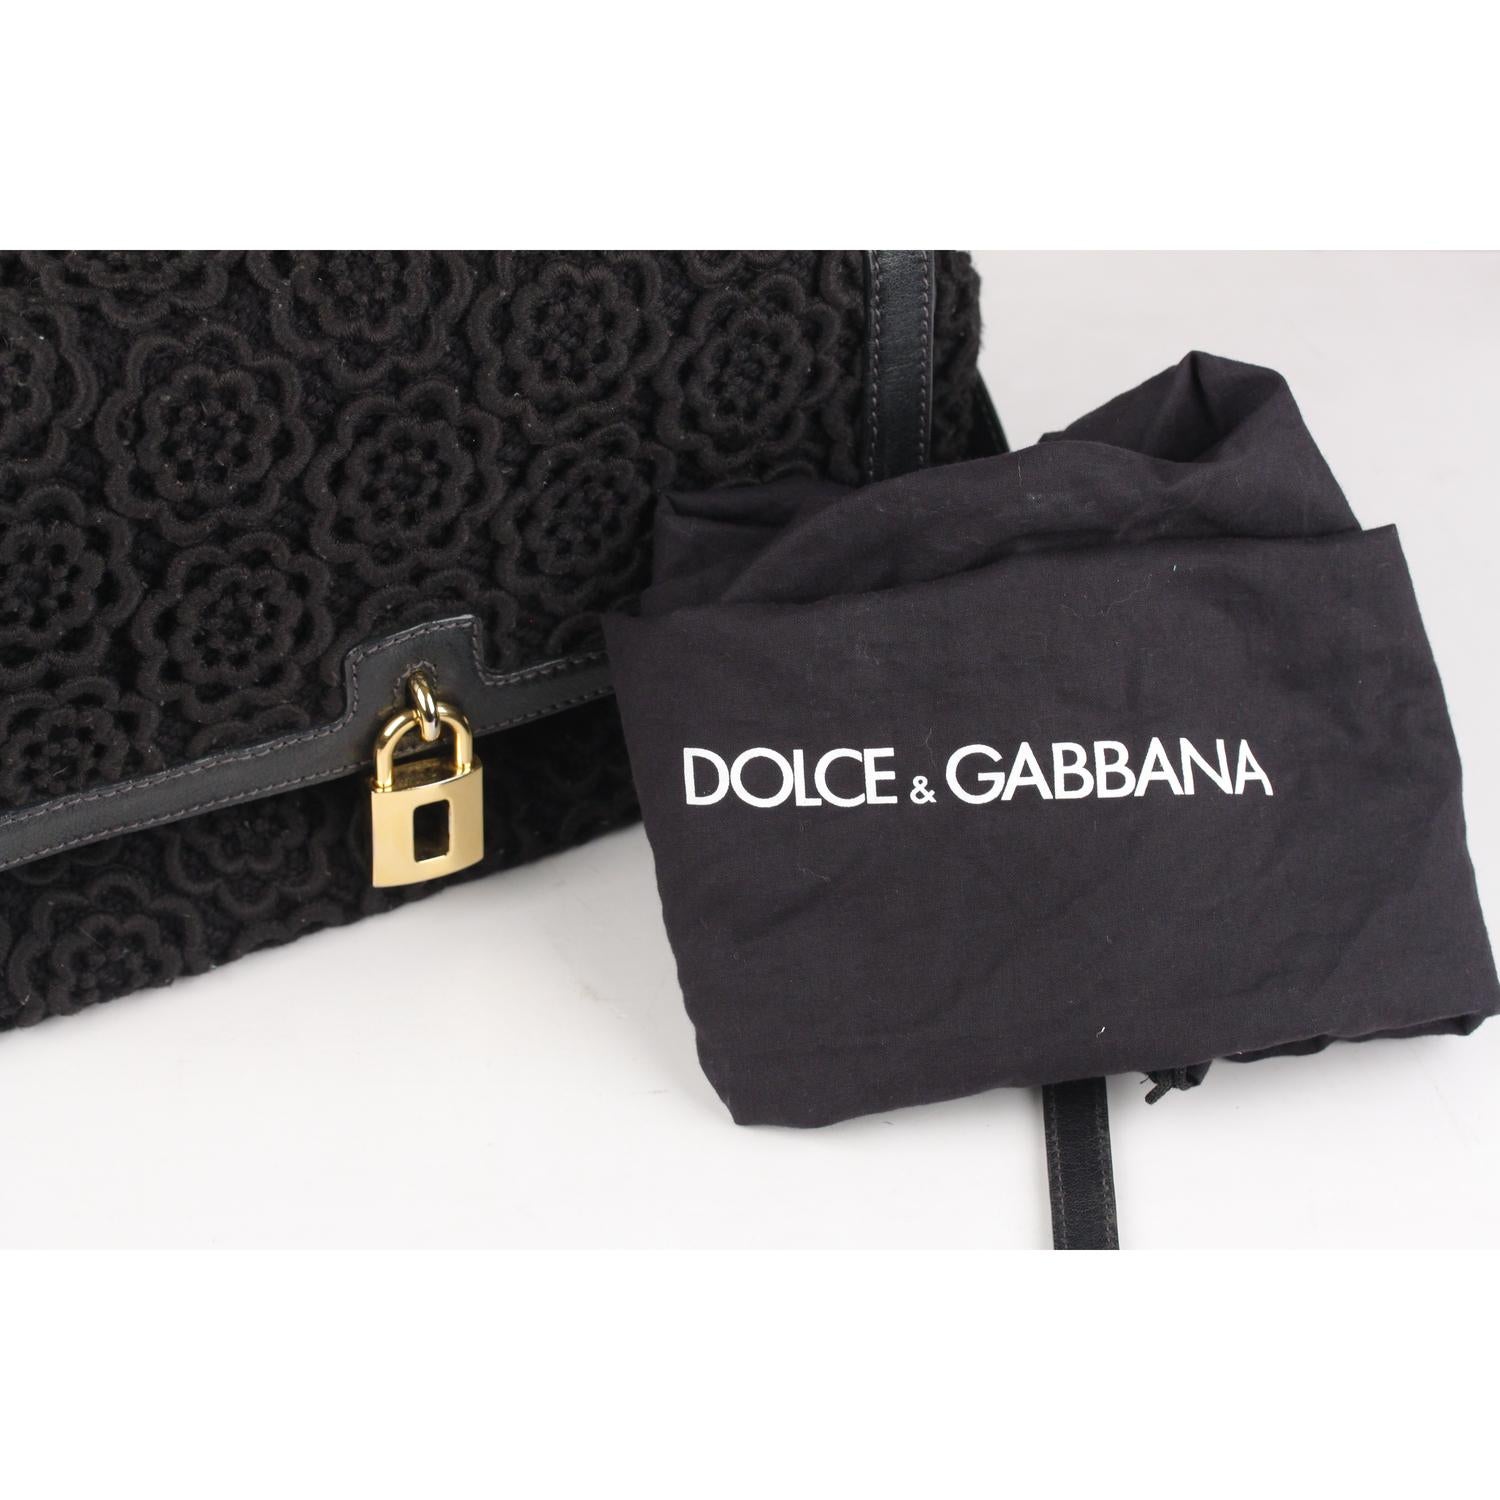 Dolce & Gabbana Black Crochet Miss Bonita Satchel Handbag 3